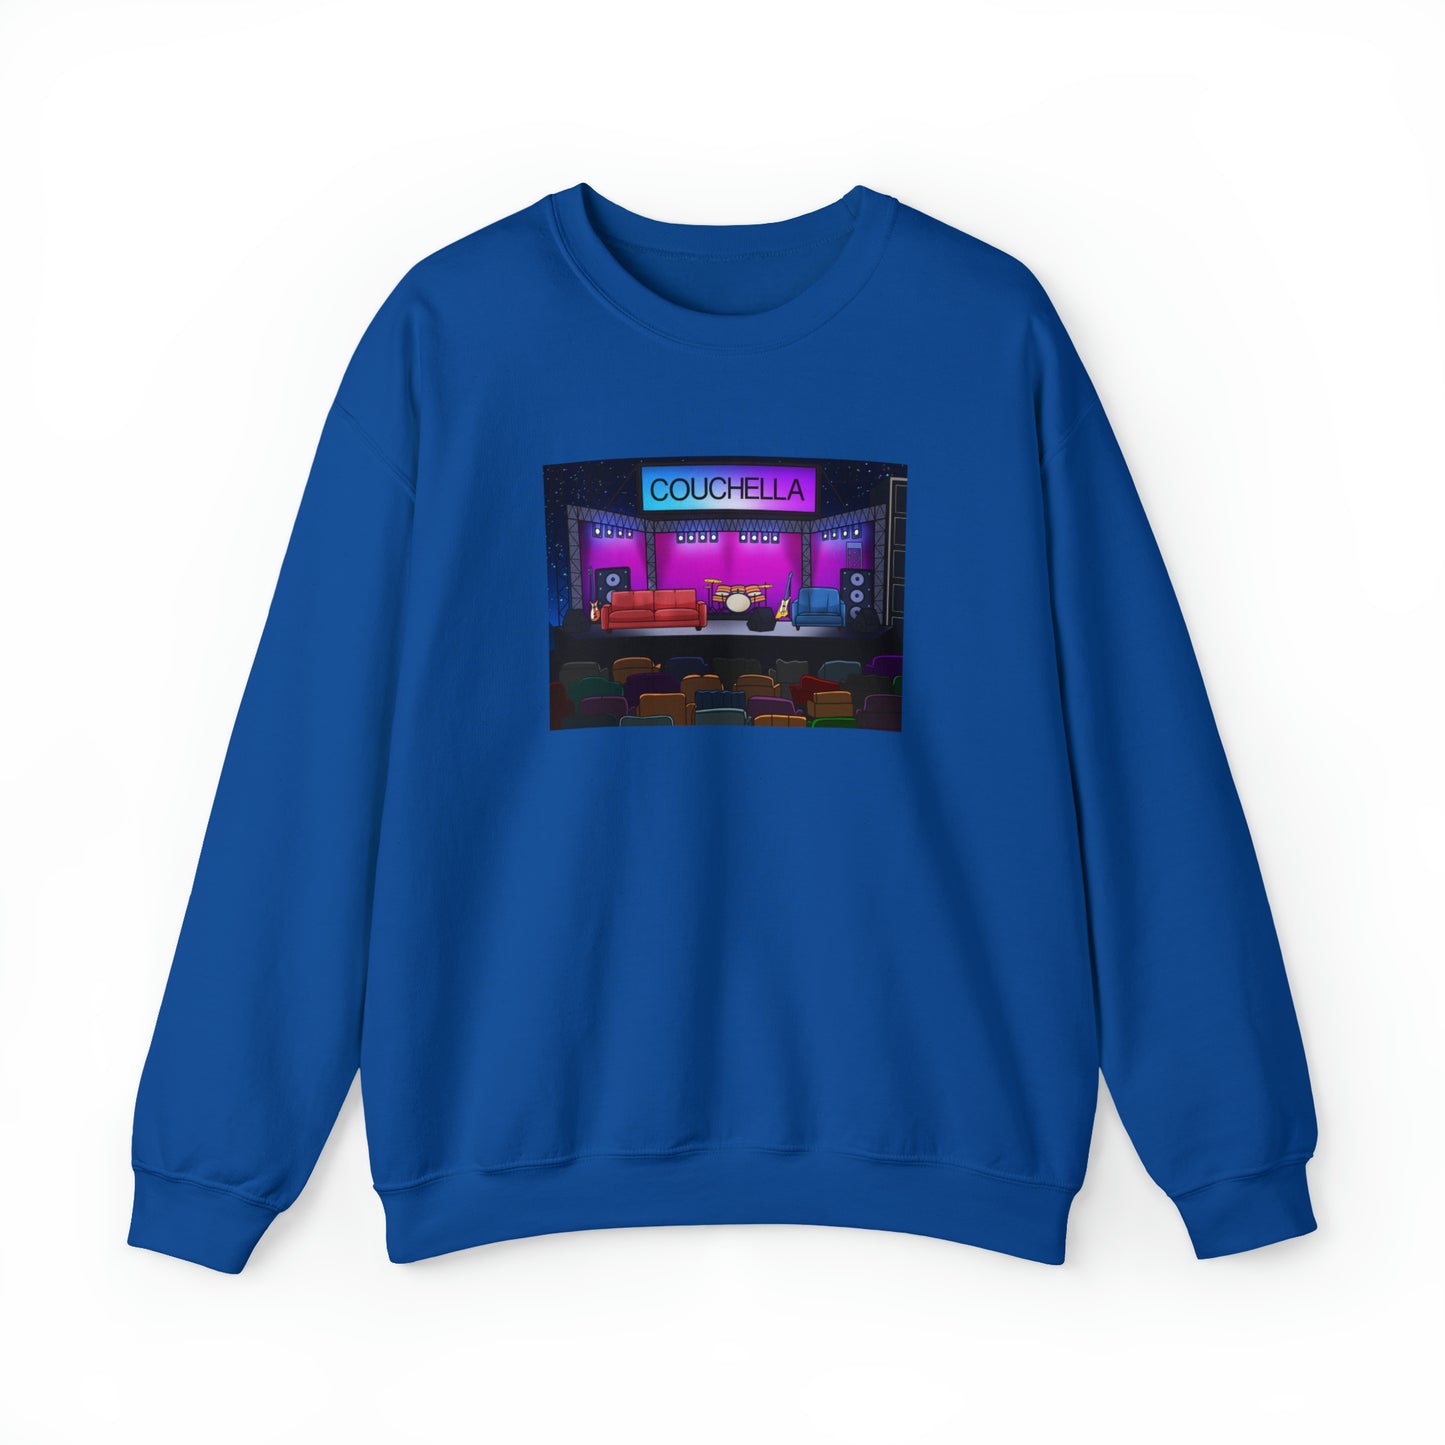 Custom Parody Crewneck Sweatshirt, Couchella